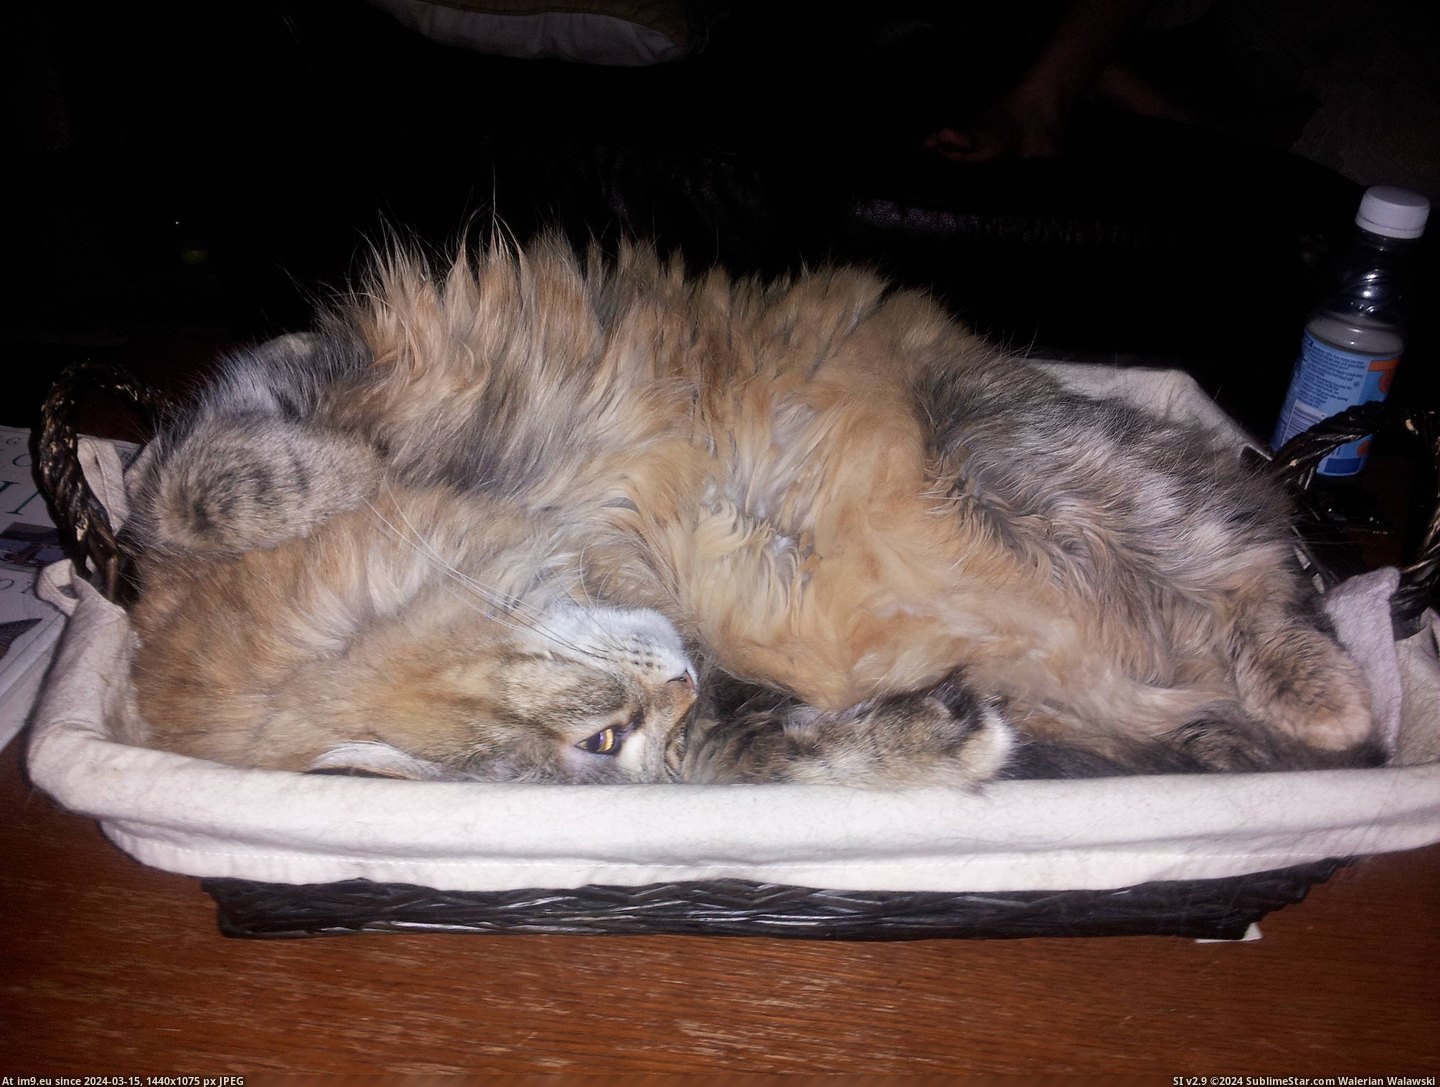 #Cats #How #Kisa #Sits #Sleeps [Cats] How Kisa sits and sleeps 1 Pic. (Изображение из альбом My r/CATS favs))